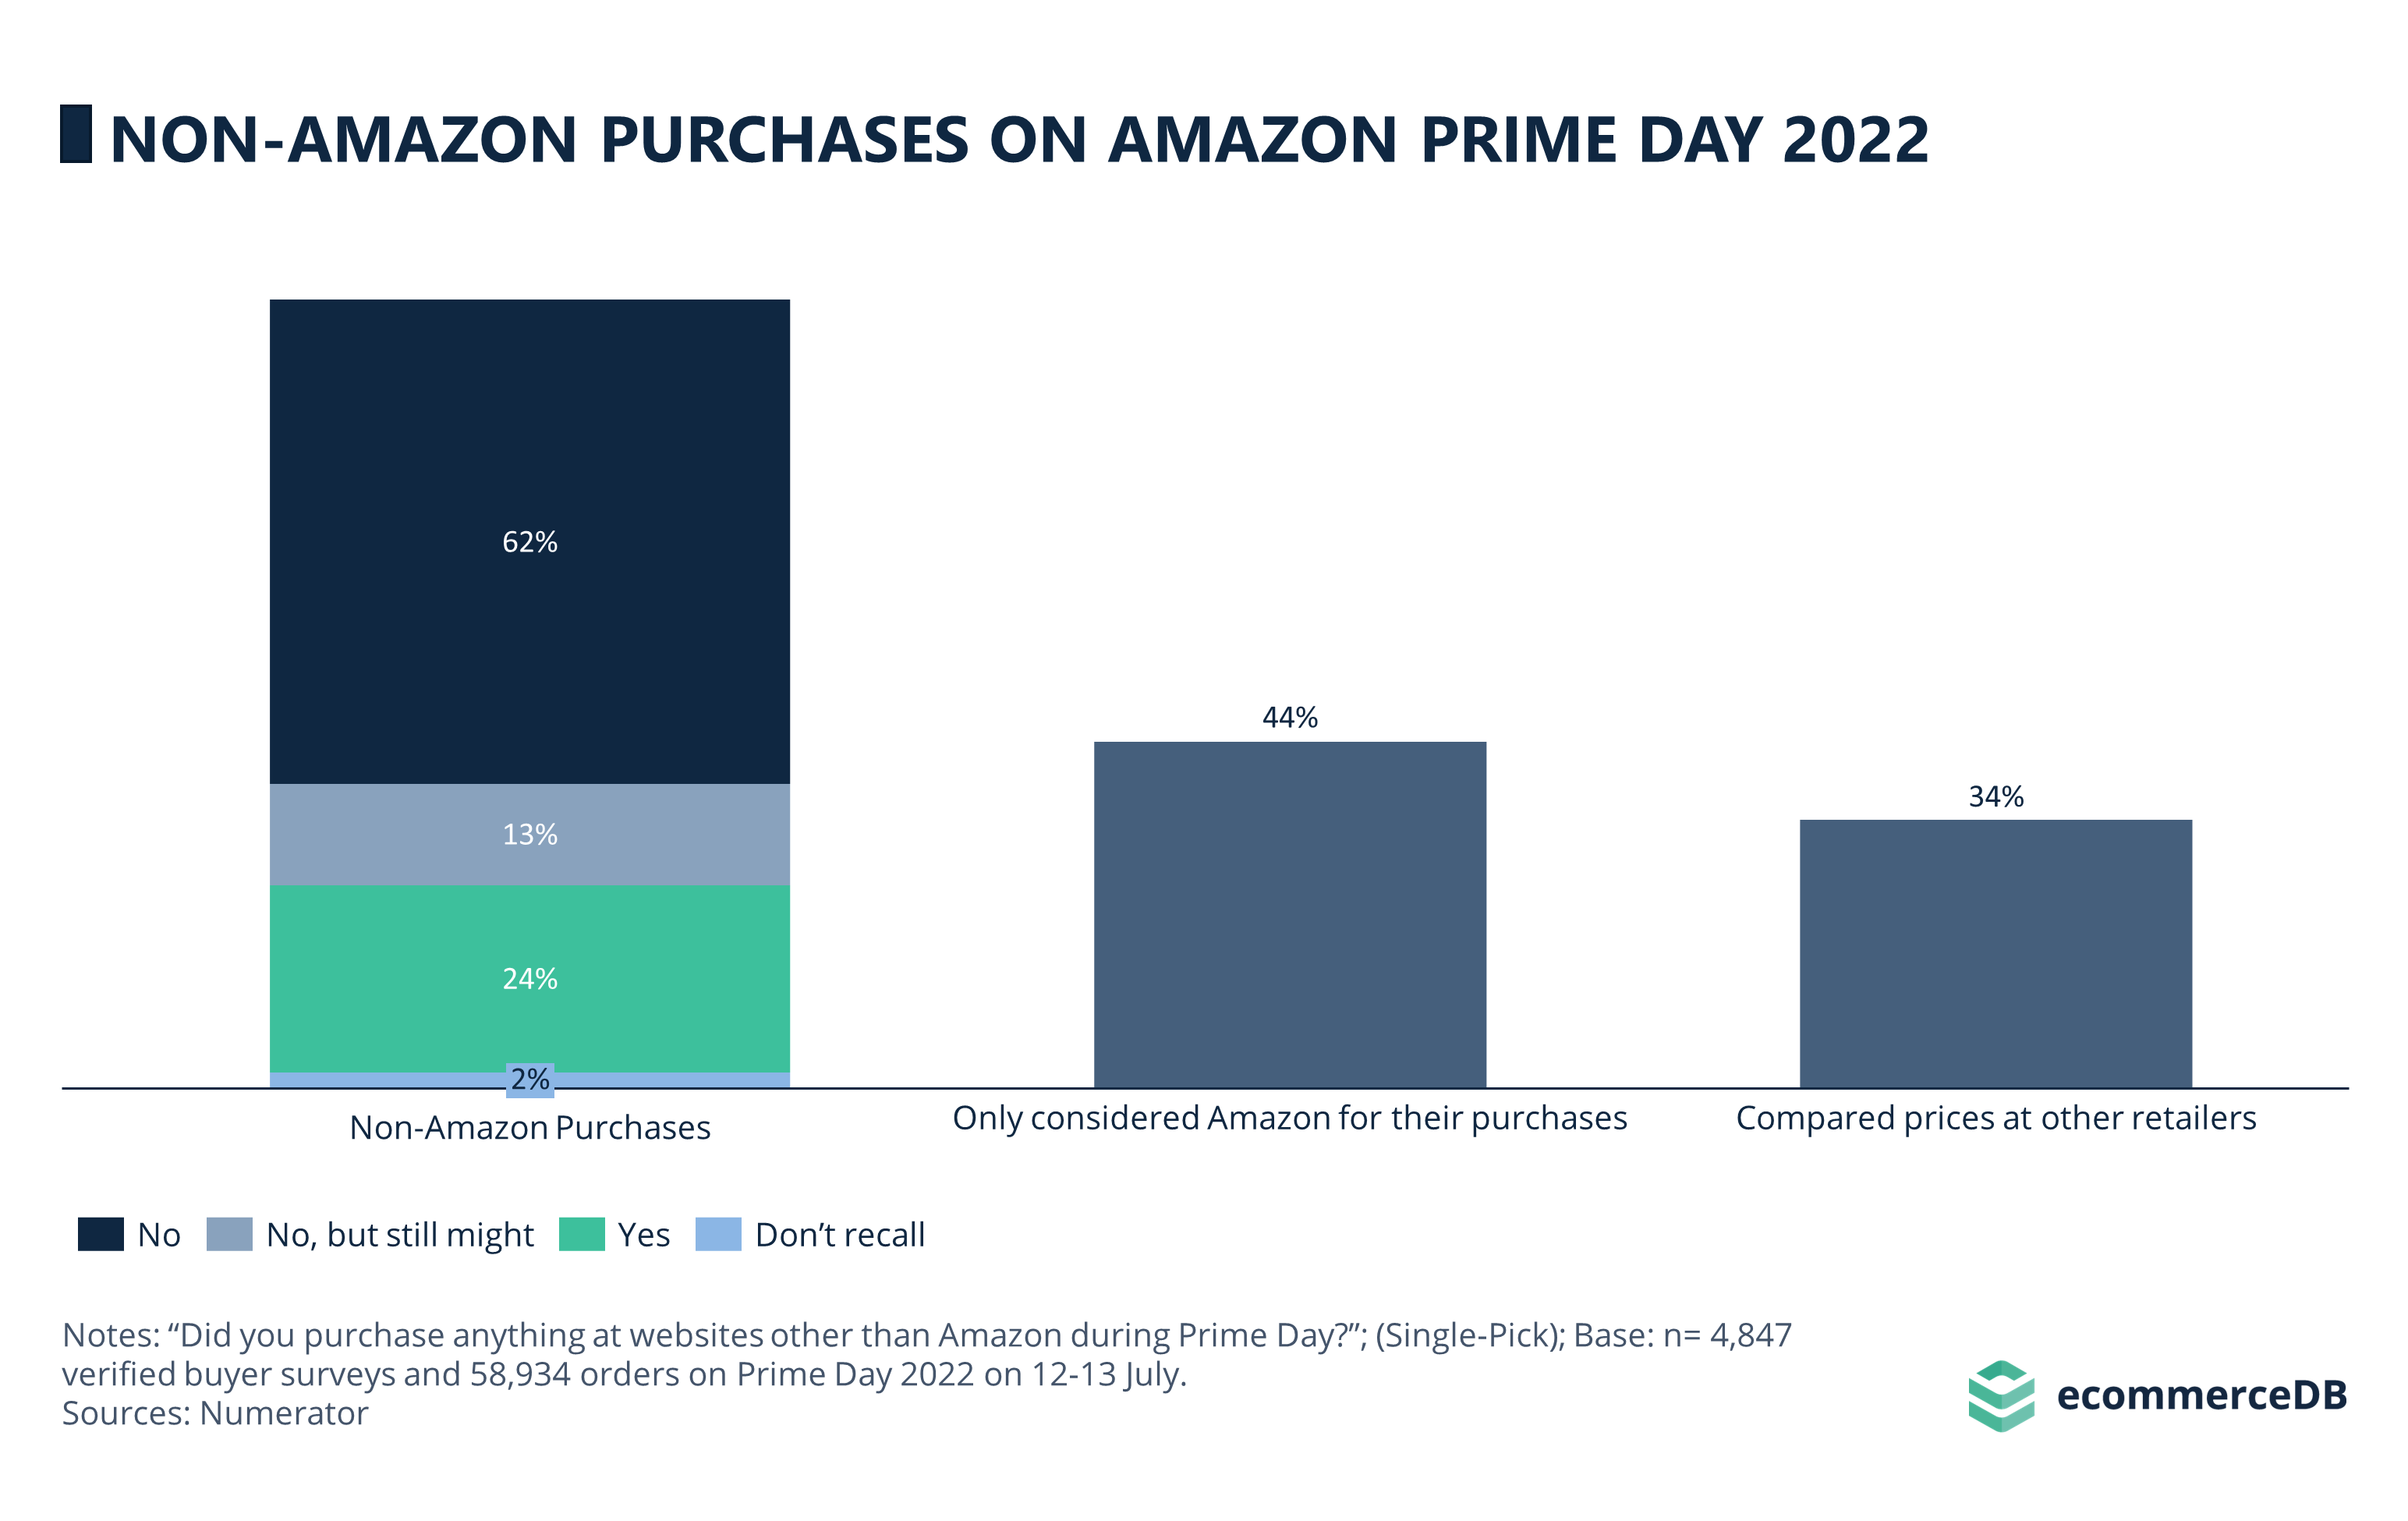 Non-Amazon Purchases on Prime Day 2022